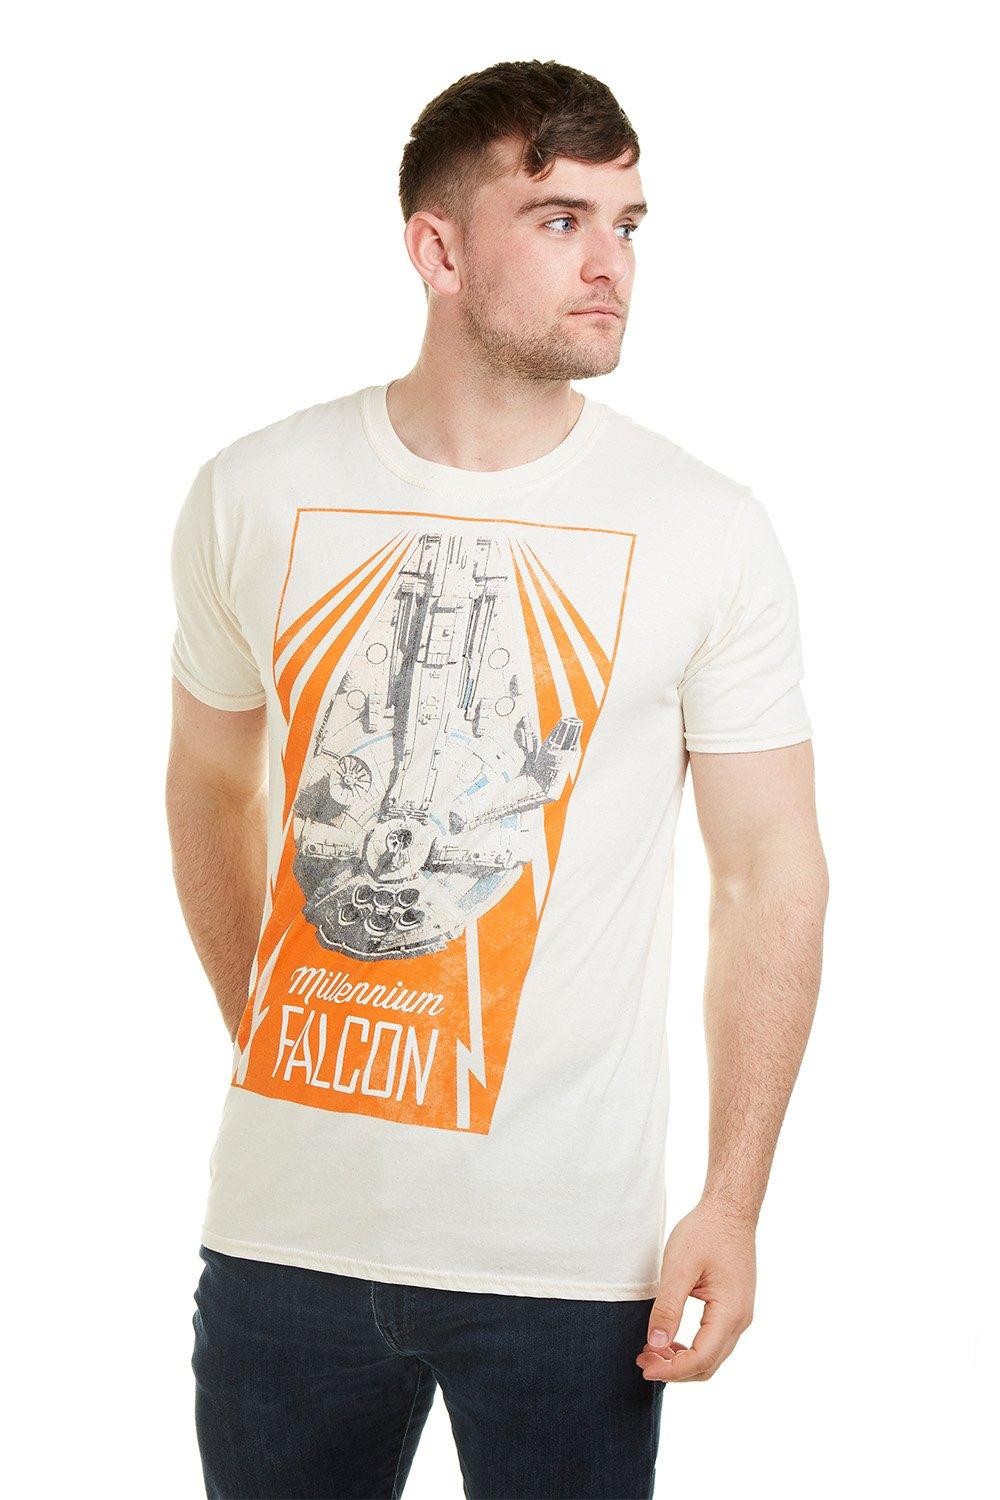 Новая хлопковая футболка Falcon Star Wars, белый